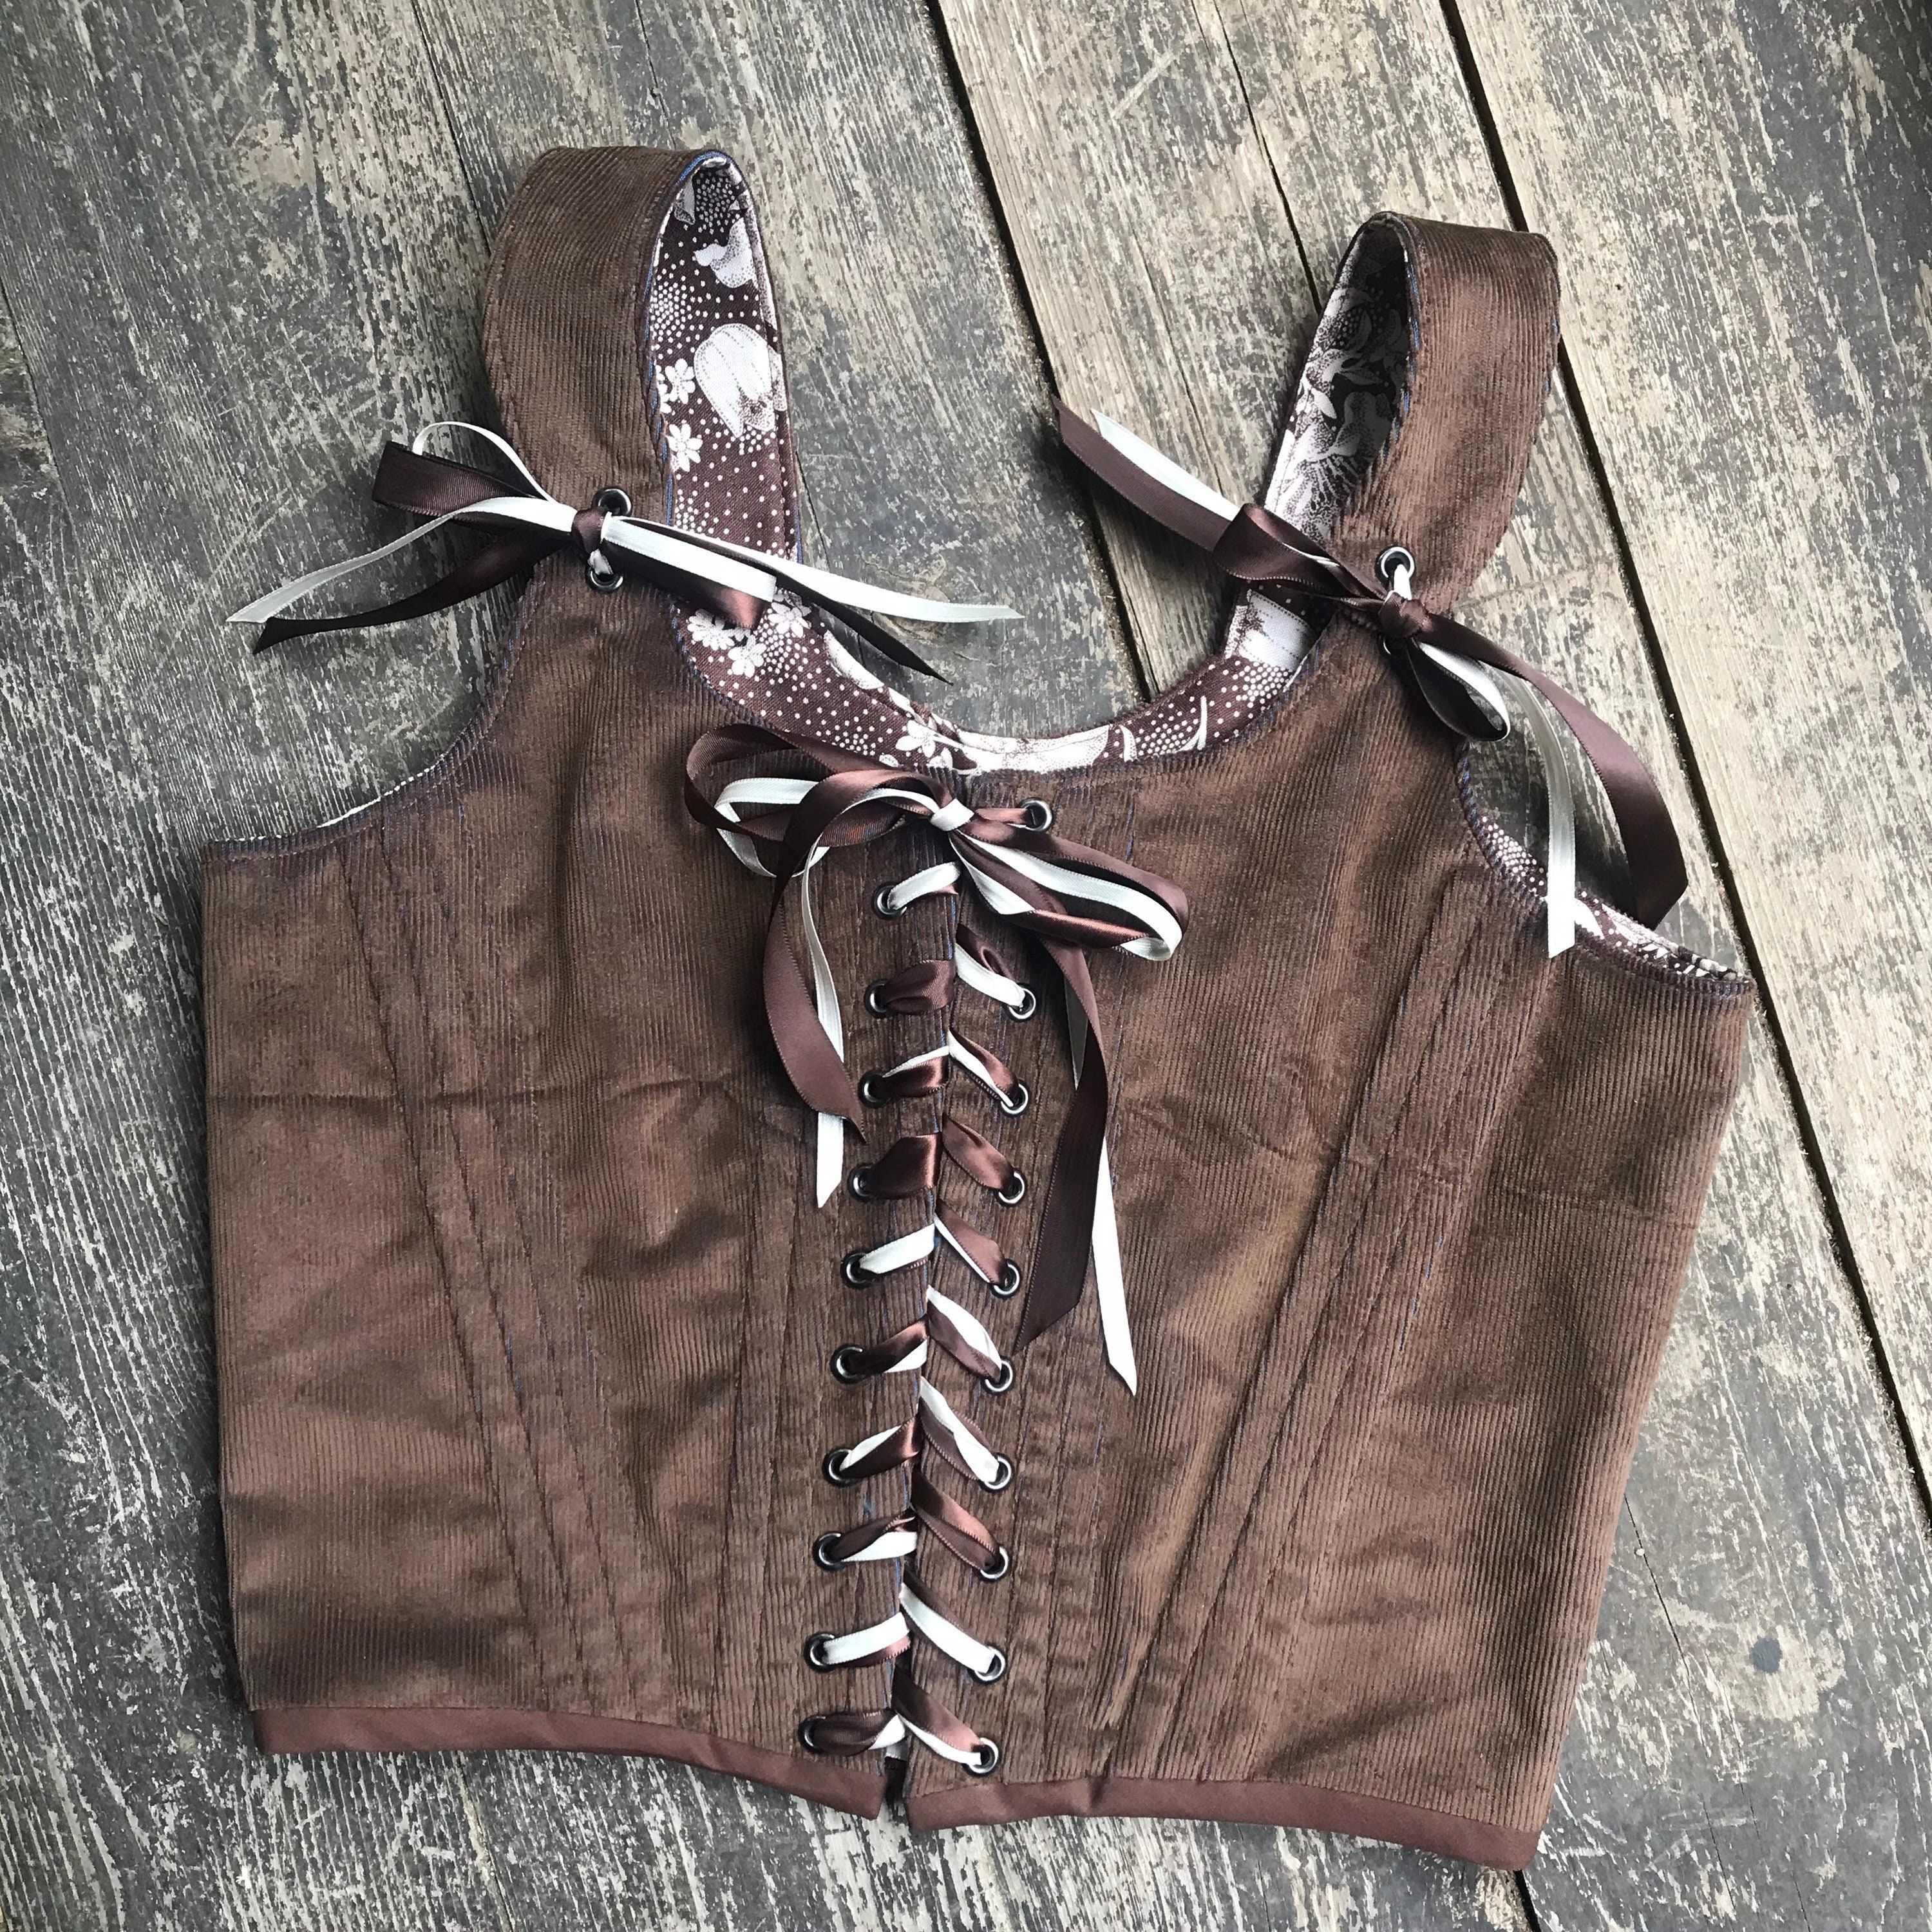 Mother Hylde Folkwear Stays brown corduroy vintage ribbon handmade corset 18th century historical costume